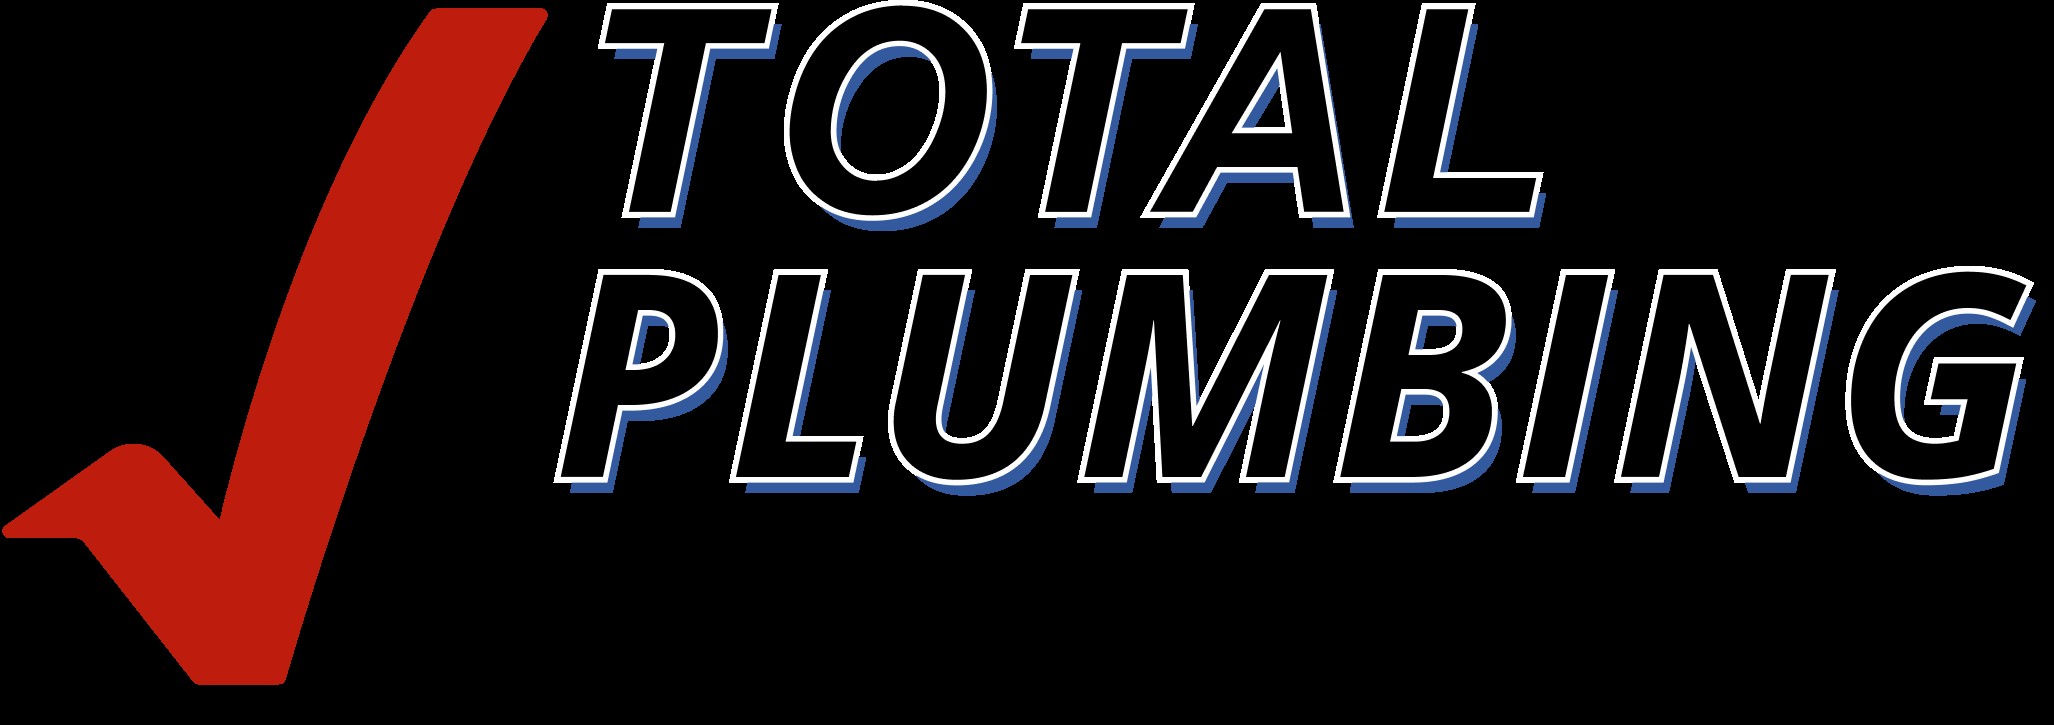 Total Plumbing Service Inc.